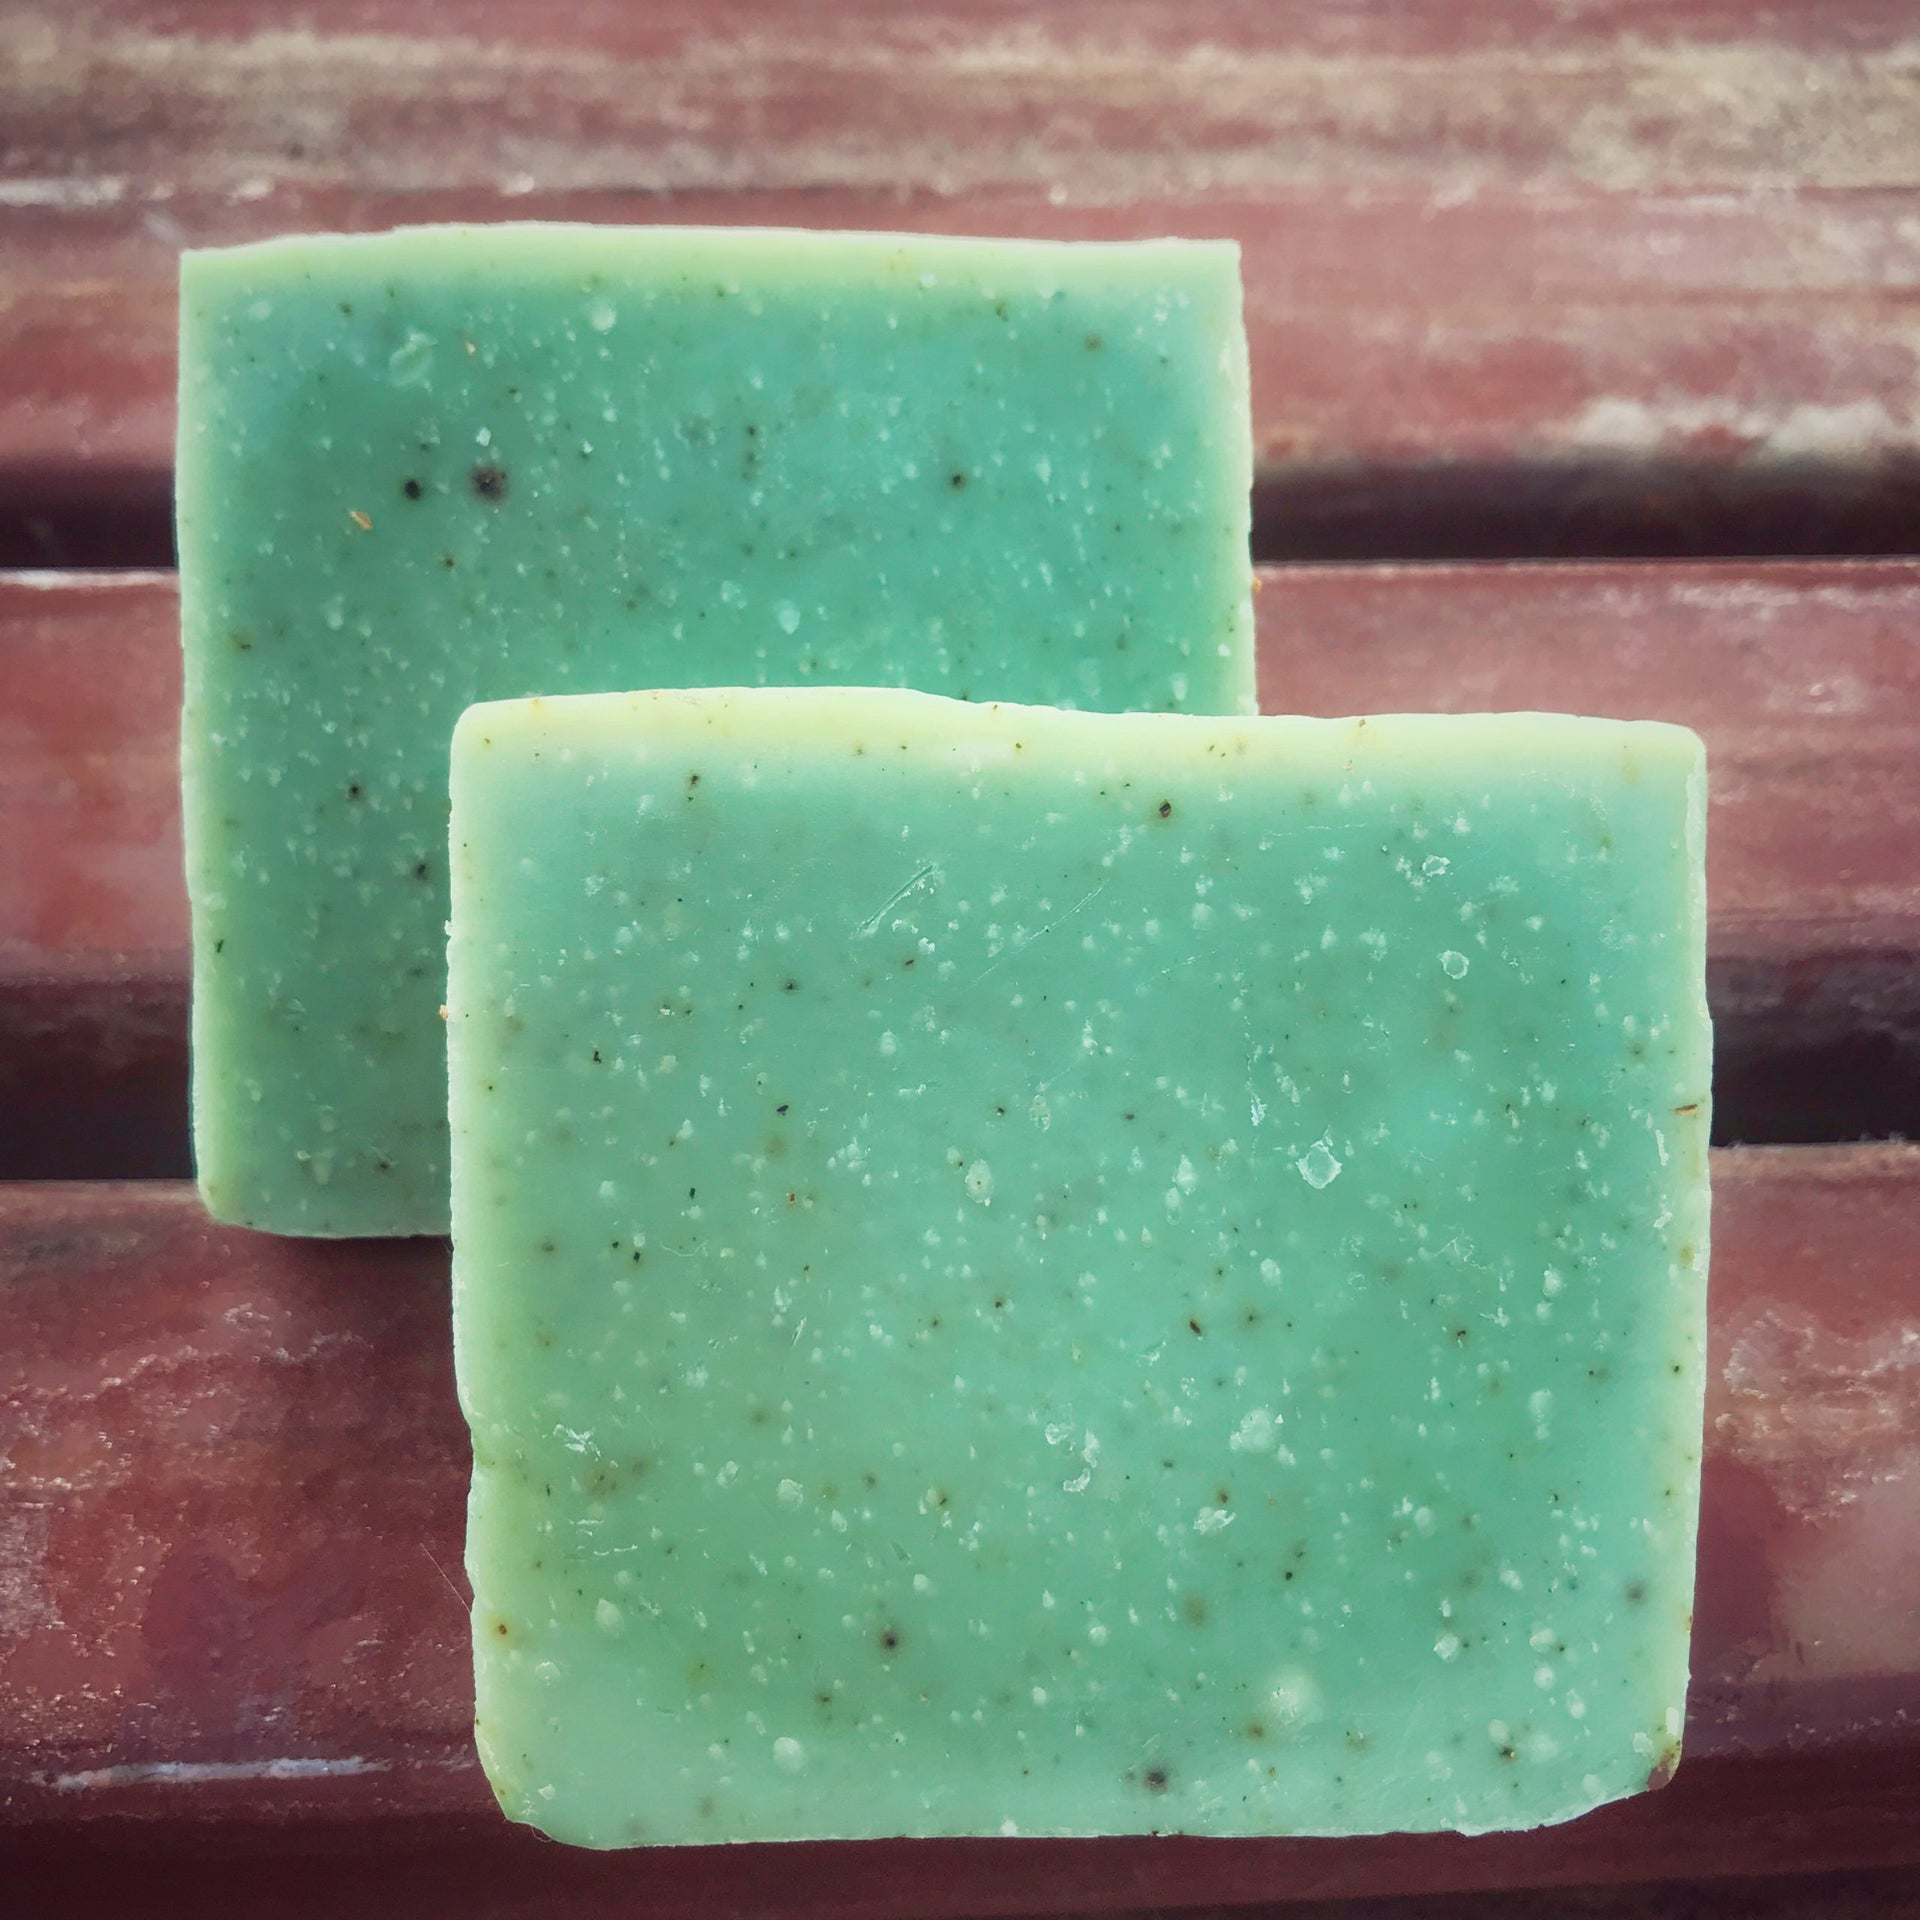 Load video: Product demonstration for Sandalwood Lemongrass Soap